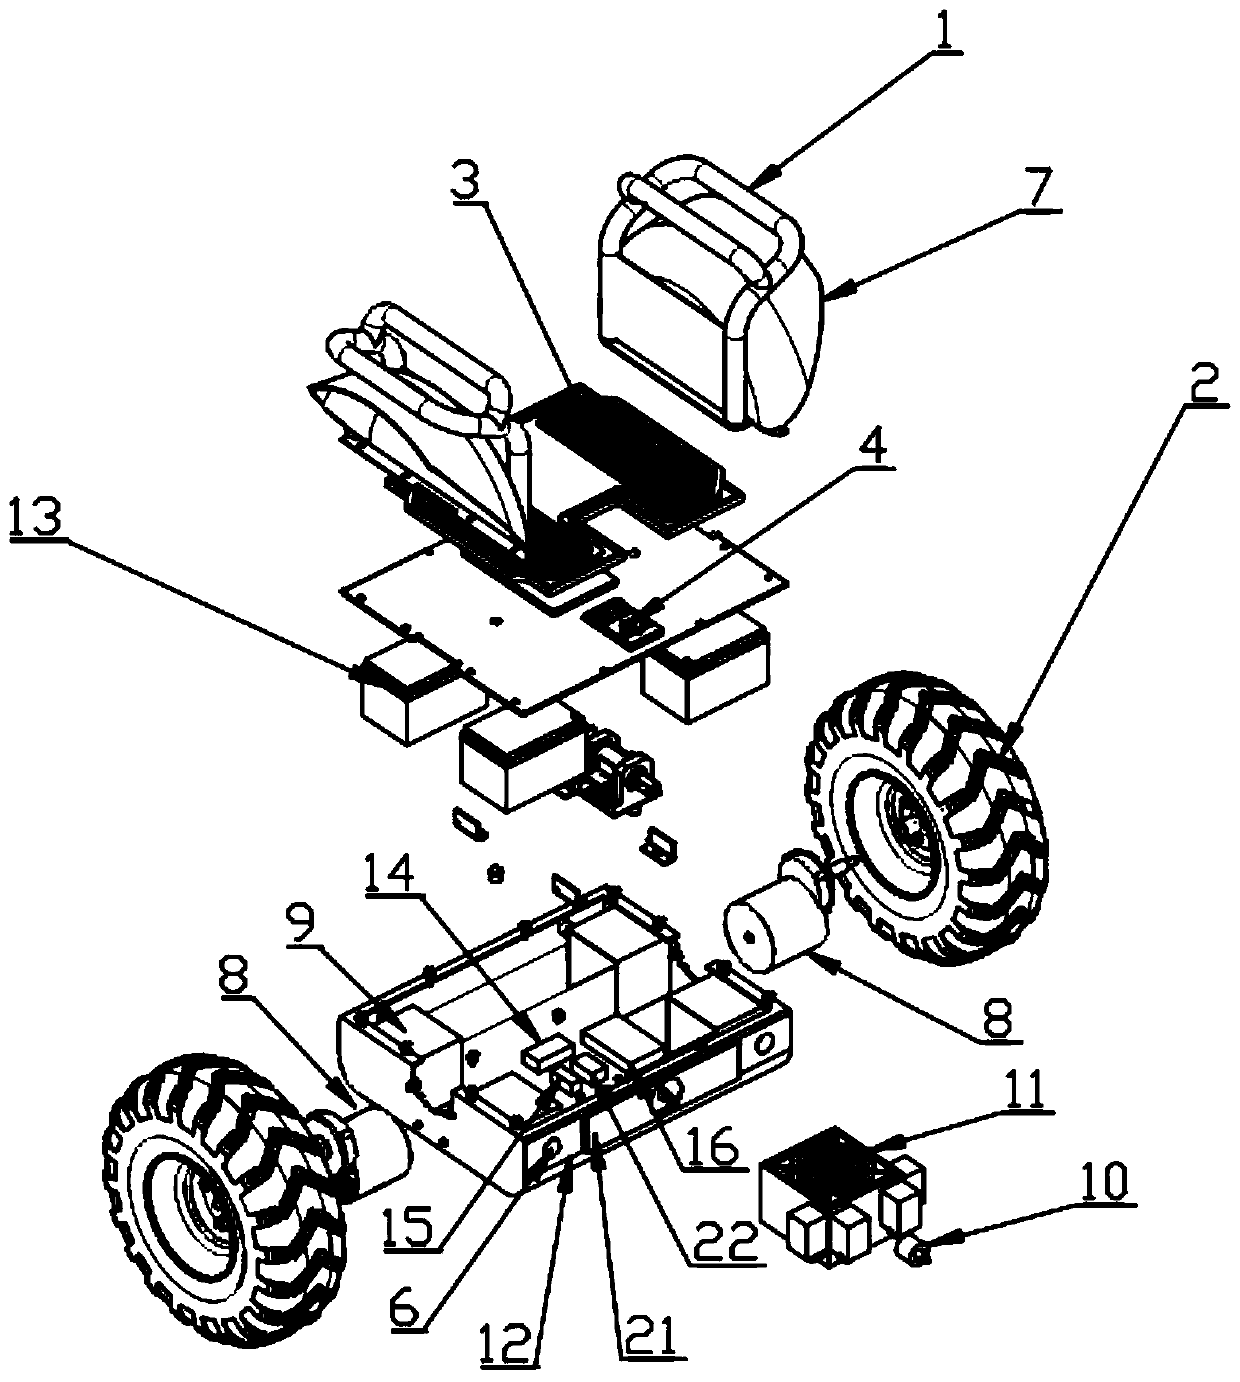 Two-wheel self-balancing trolley